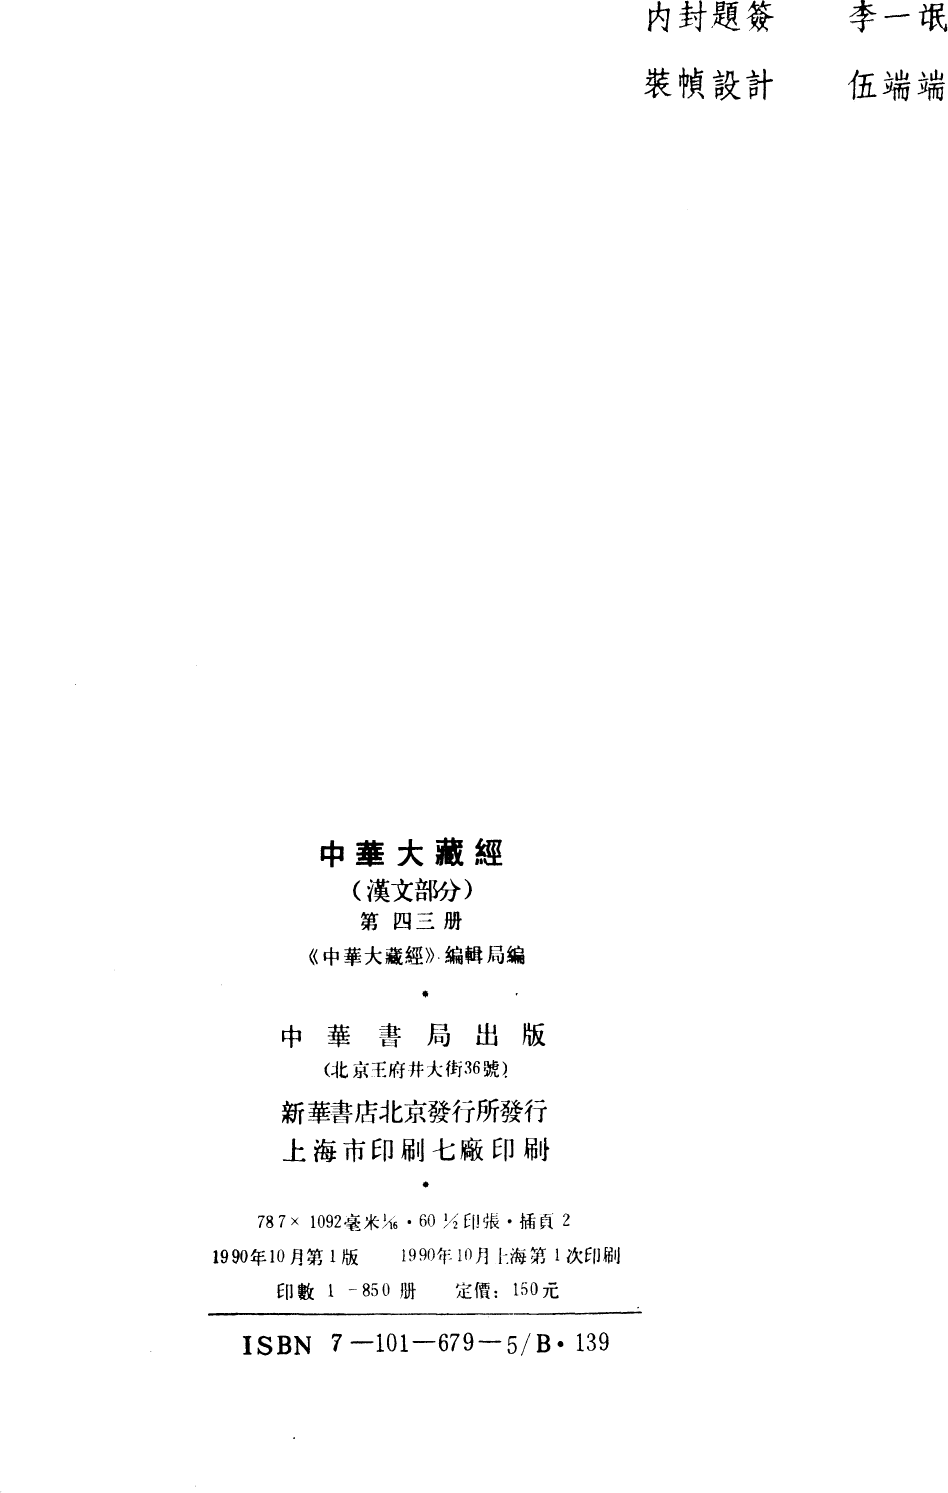 File:《中華大藏經》 第43冊 版權頁.png